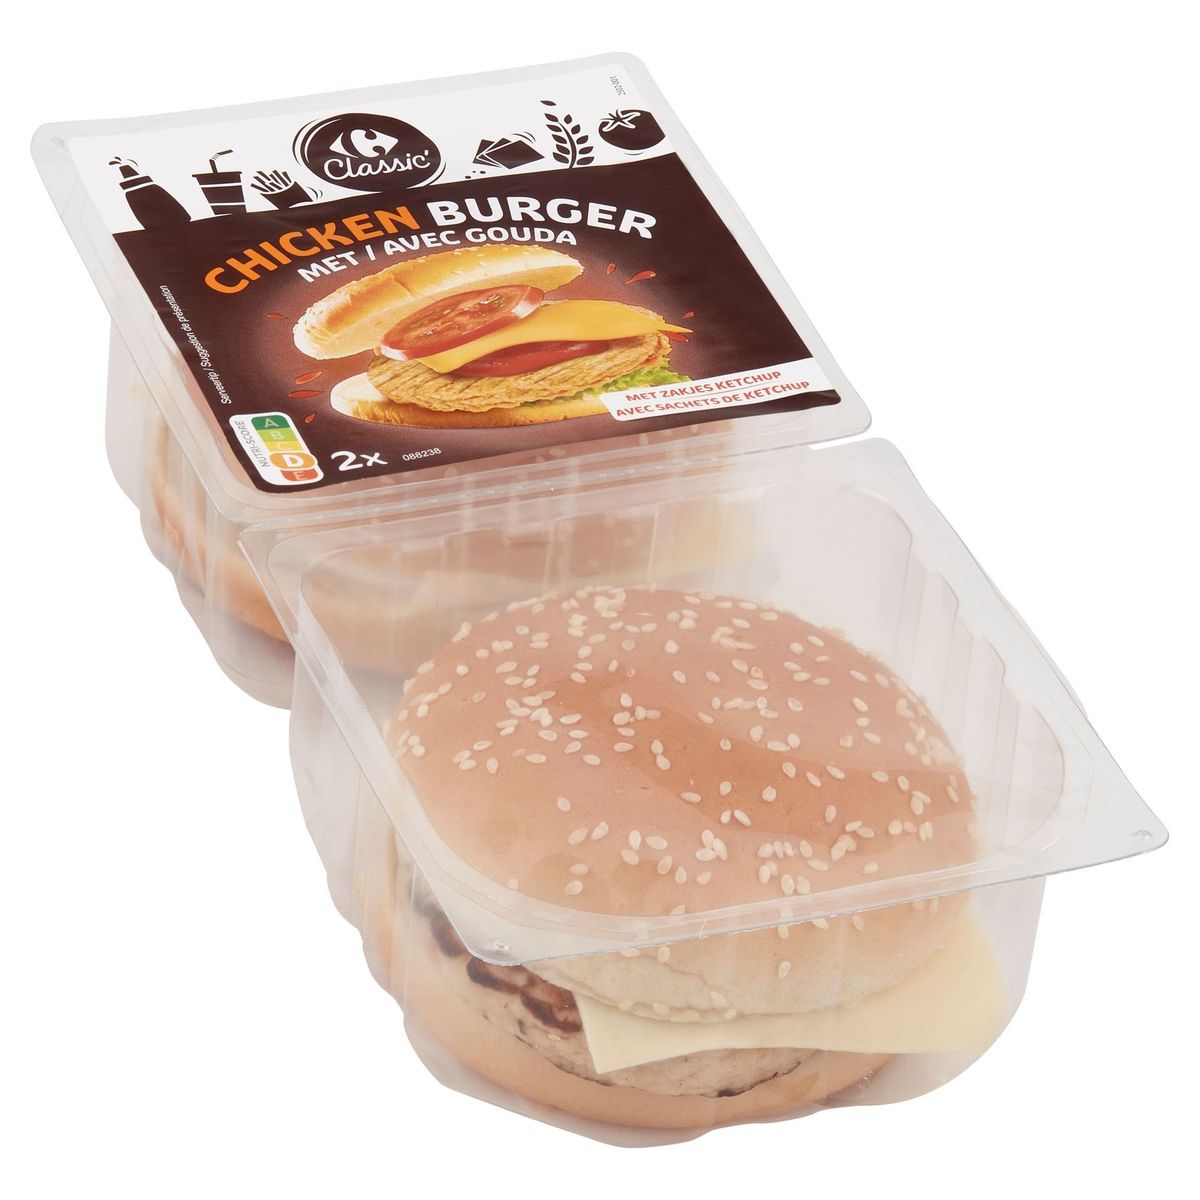 Carrefour Classic' Chicken Burger avec Gouda 2 Pièces 270 g